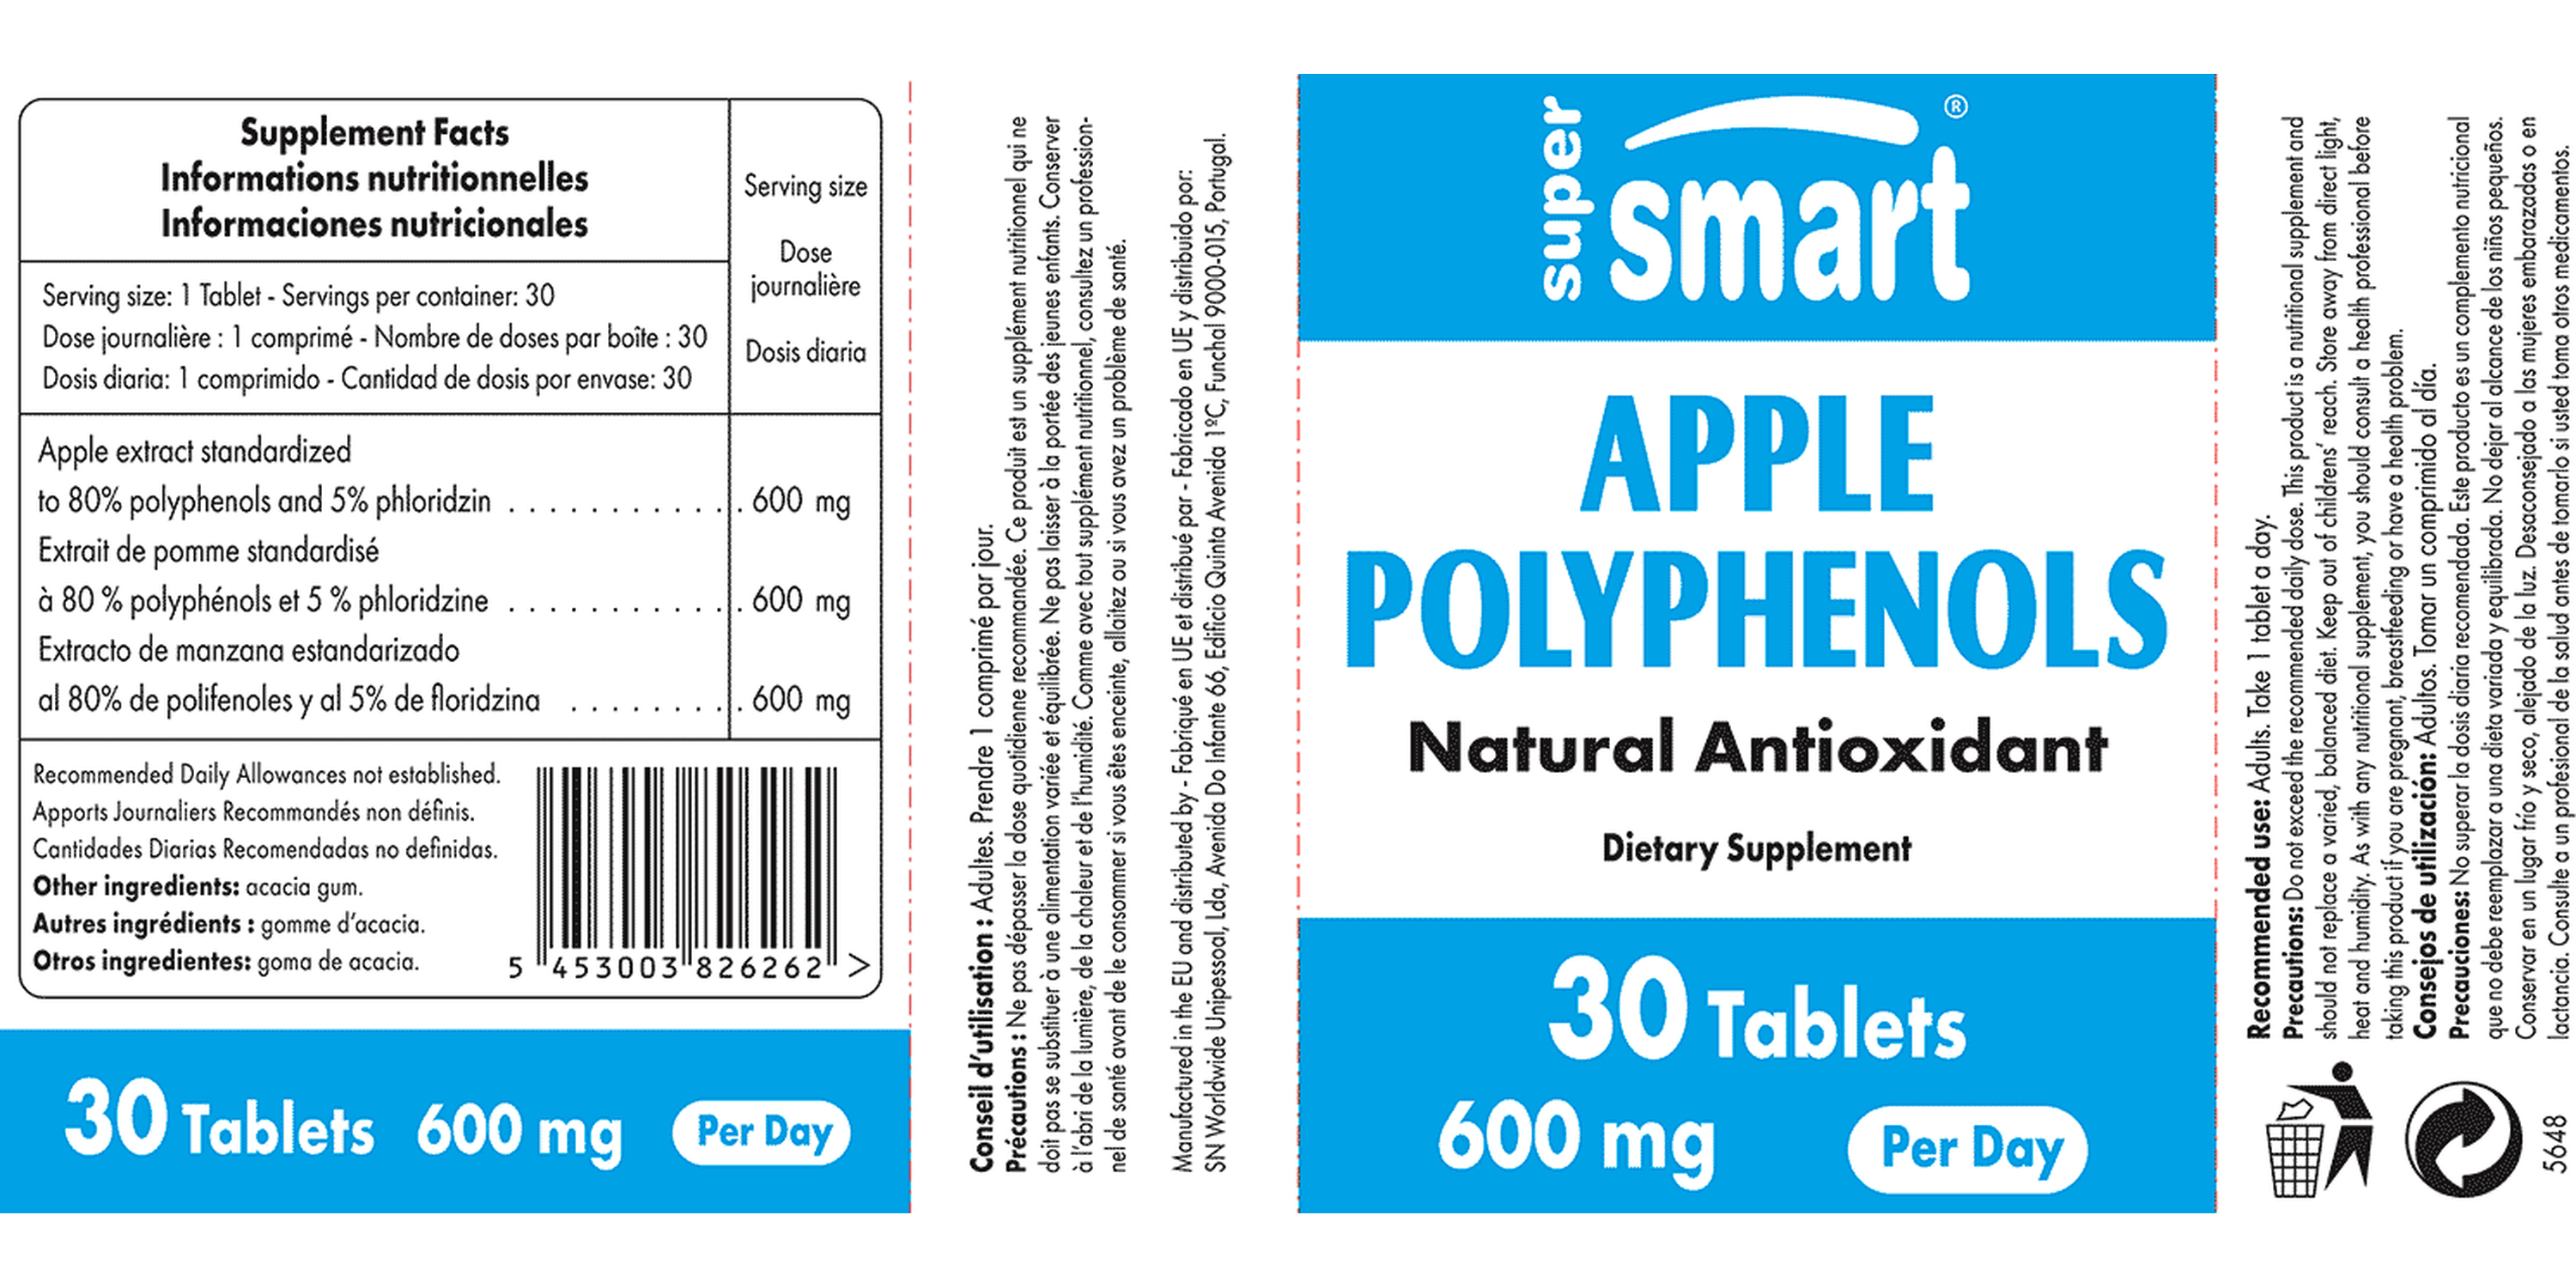 Apple Polyphenols Supplement